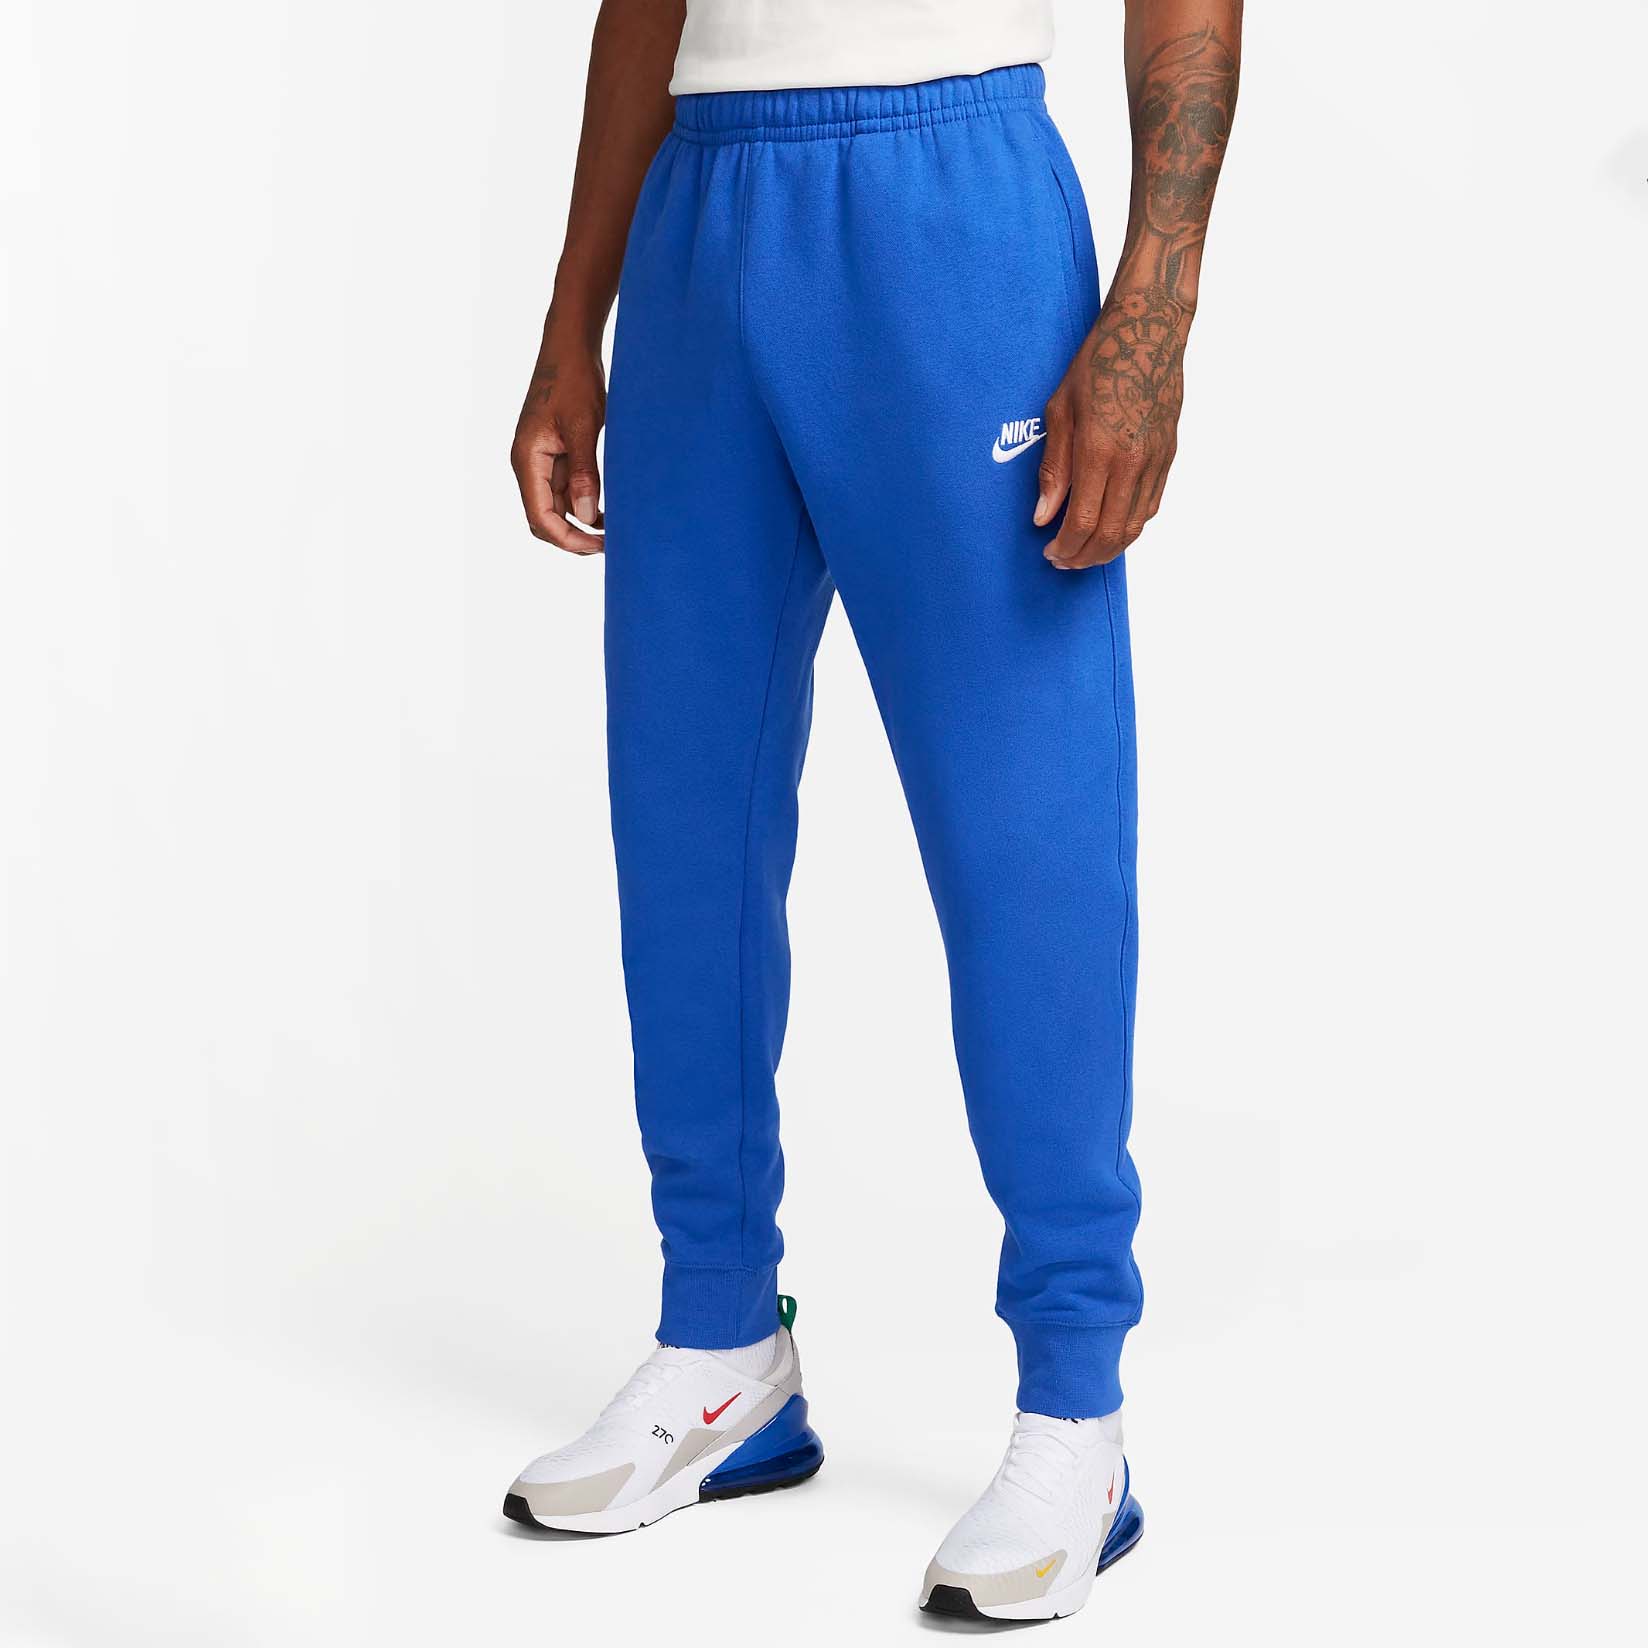 Men wearing bright blue sweatpants